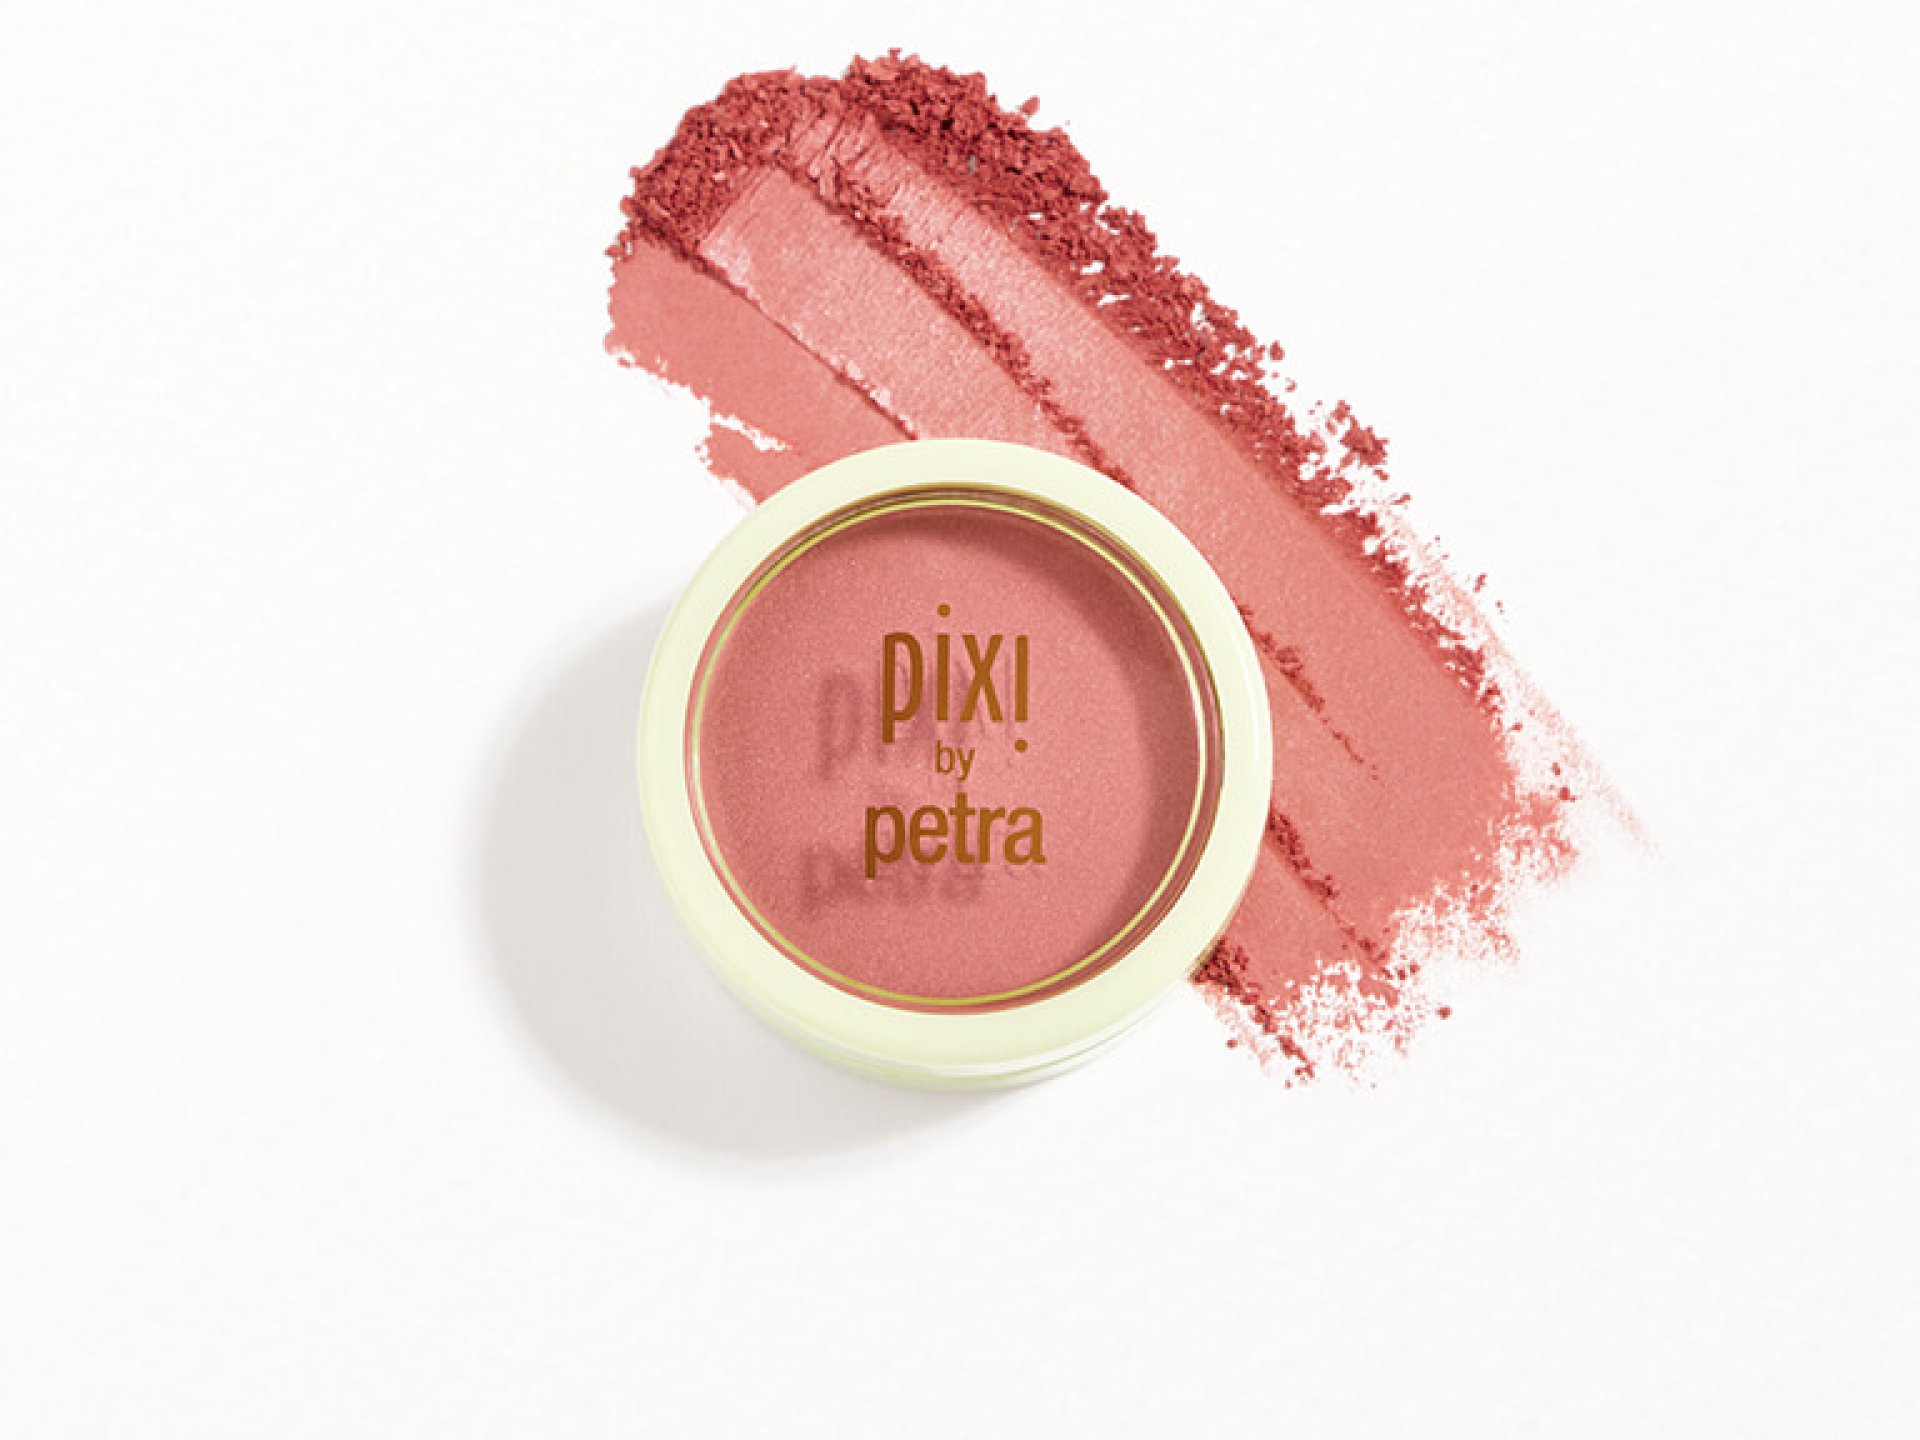 PIXI BEAUTY Fresh Face Blush in Deep Rose